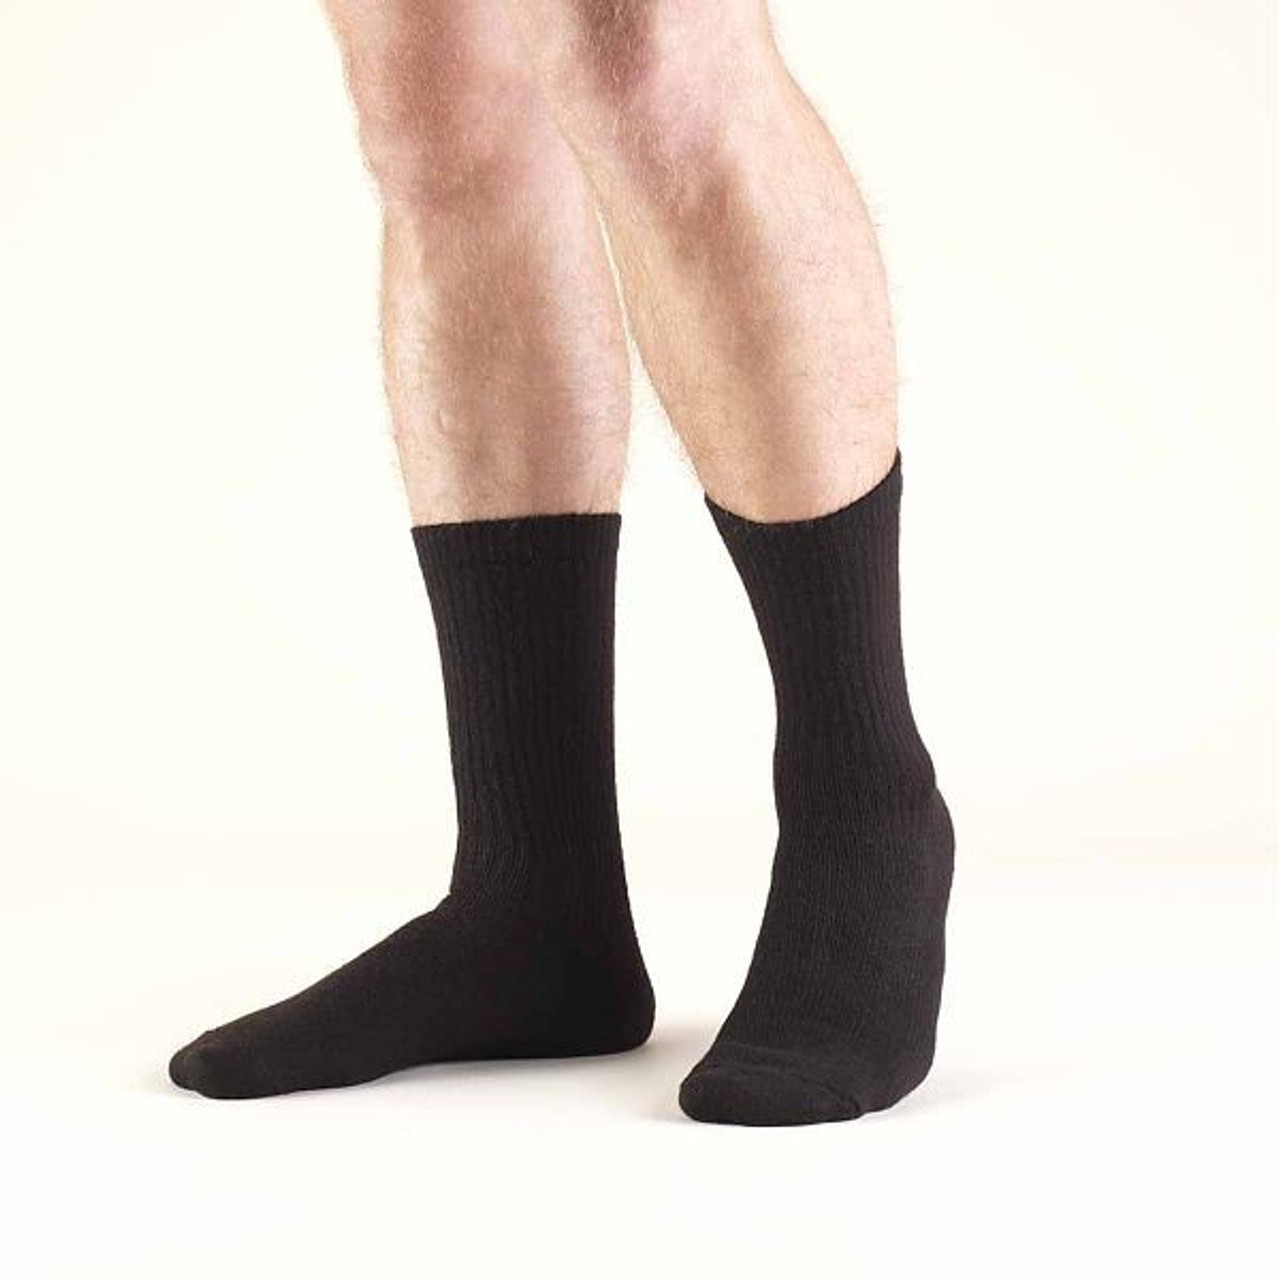 Truform 1916-M UltraDri DIABETIC & COMFORT CARE Socks seamless socks, White, Medium, 1/Pair